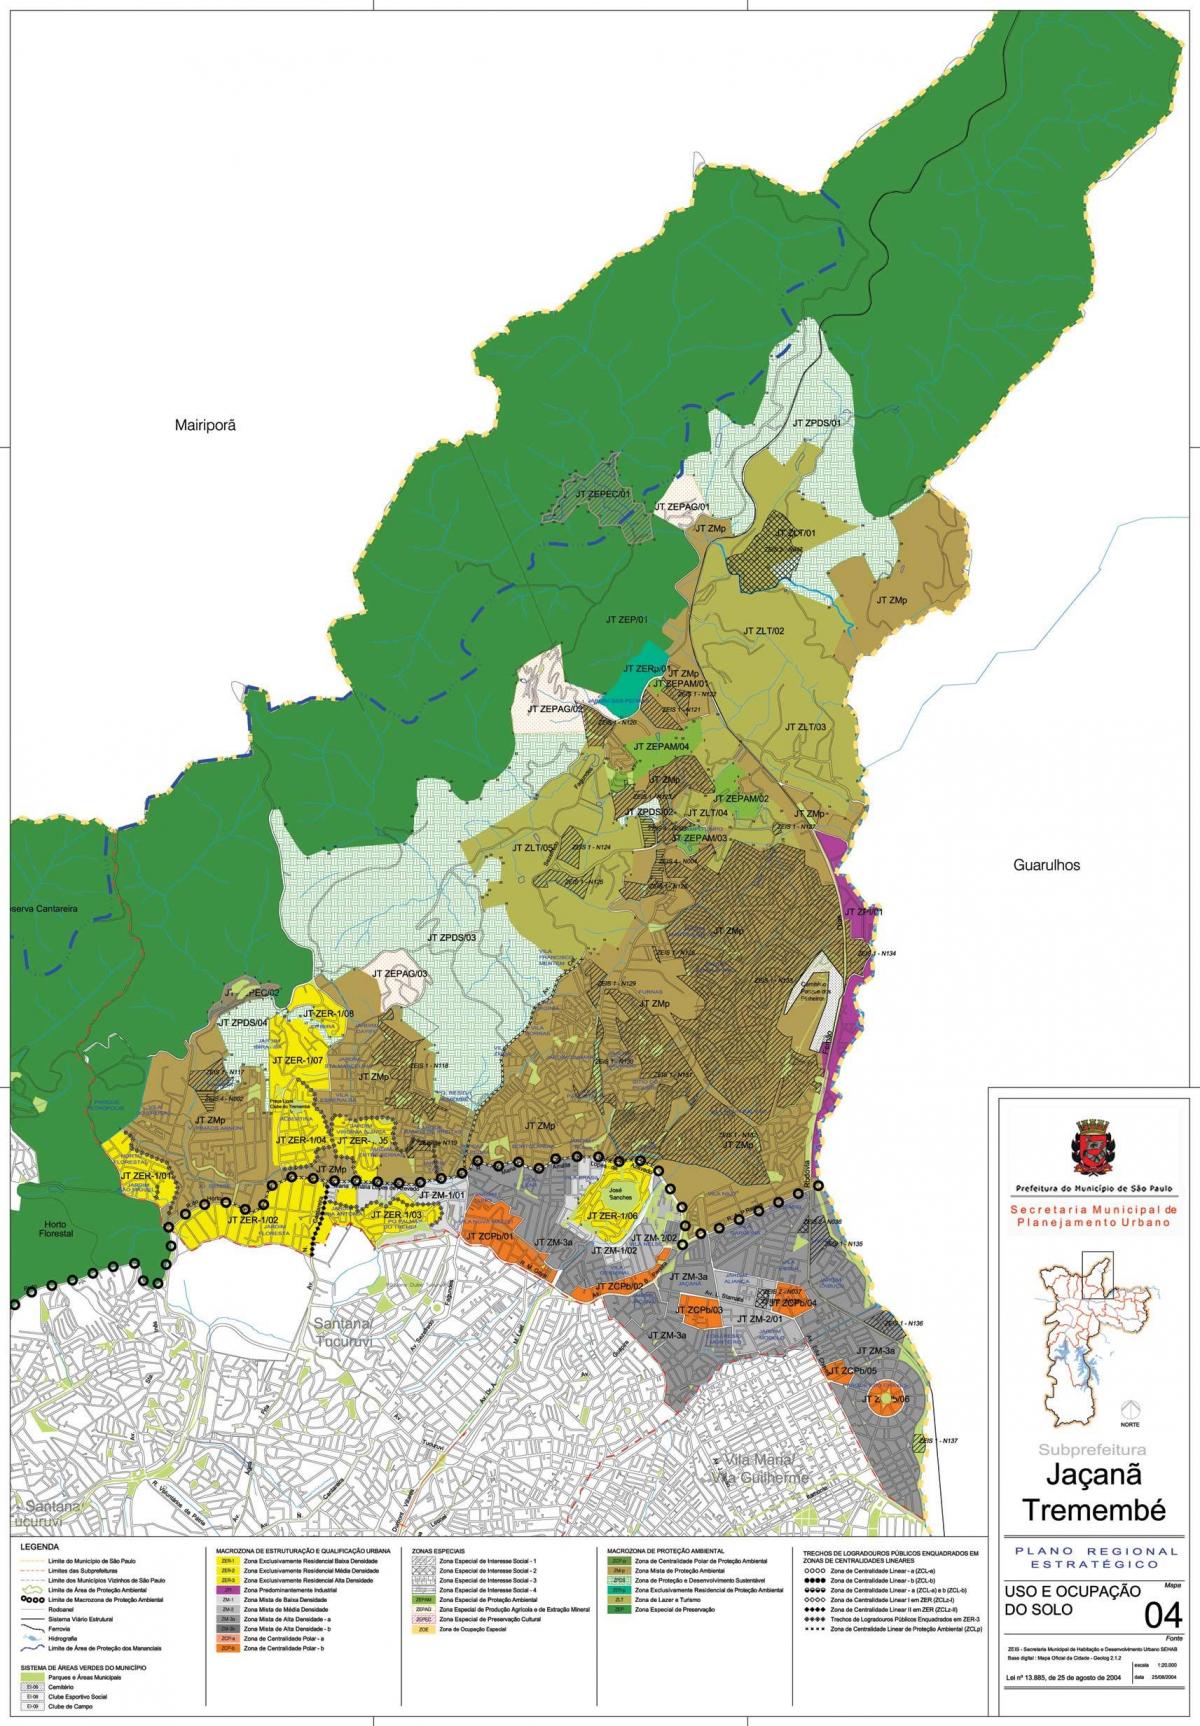 Peta Jaçanã-Tremembé São Paulo - Pekerjaan tanah